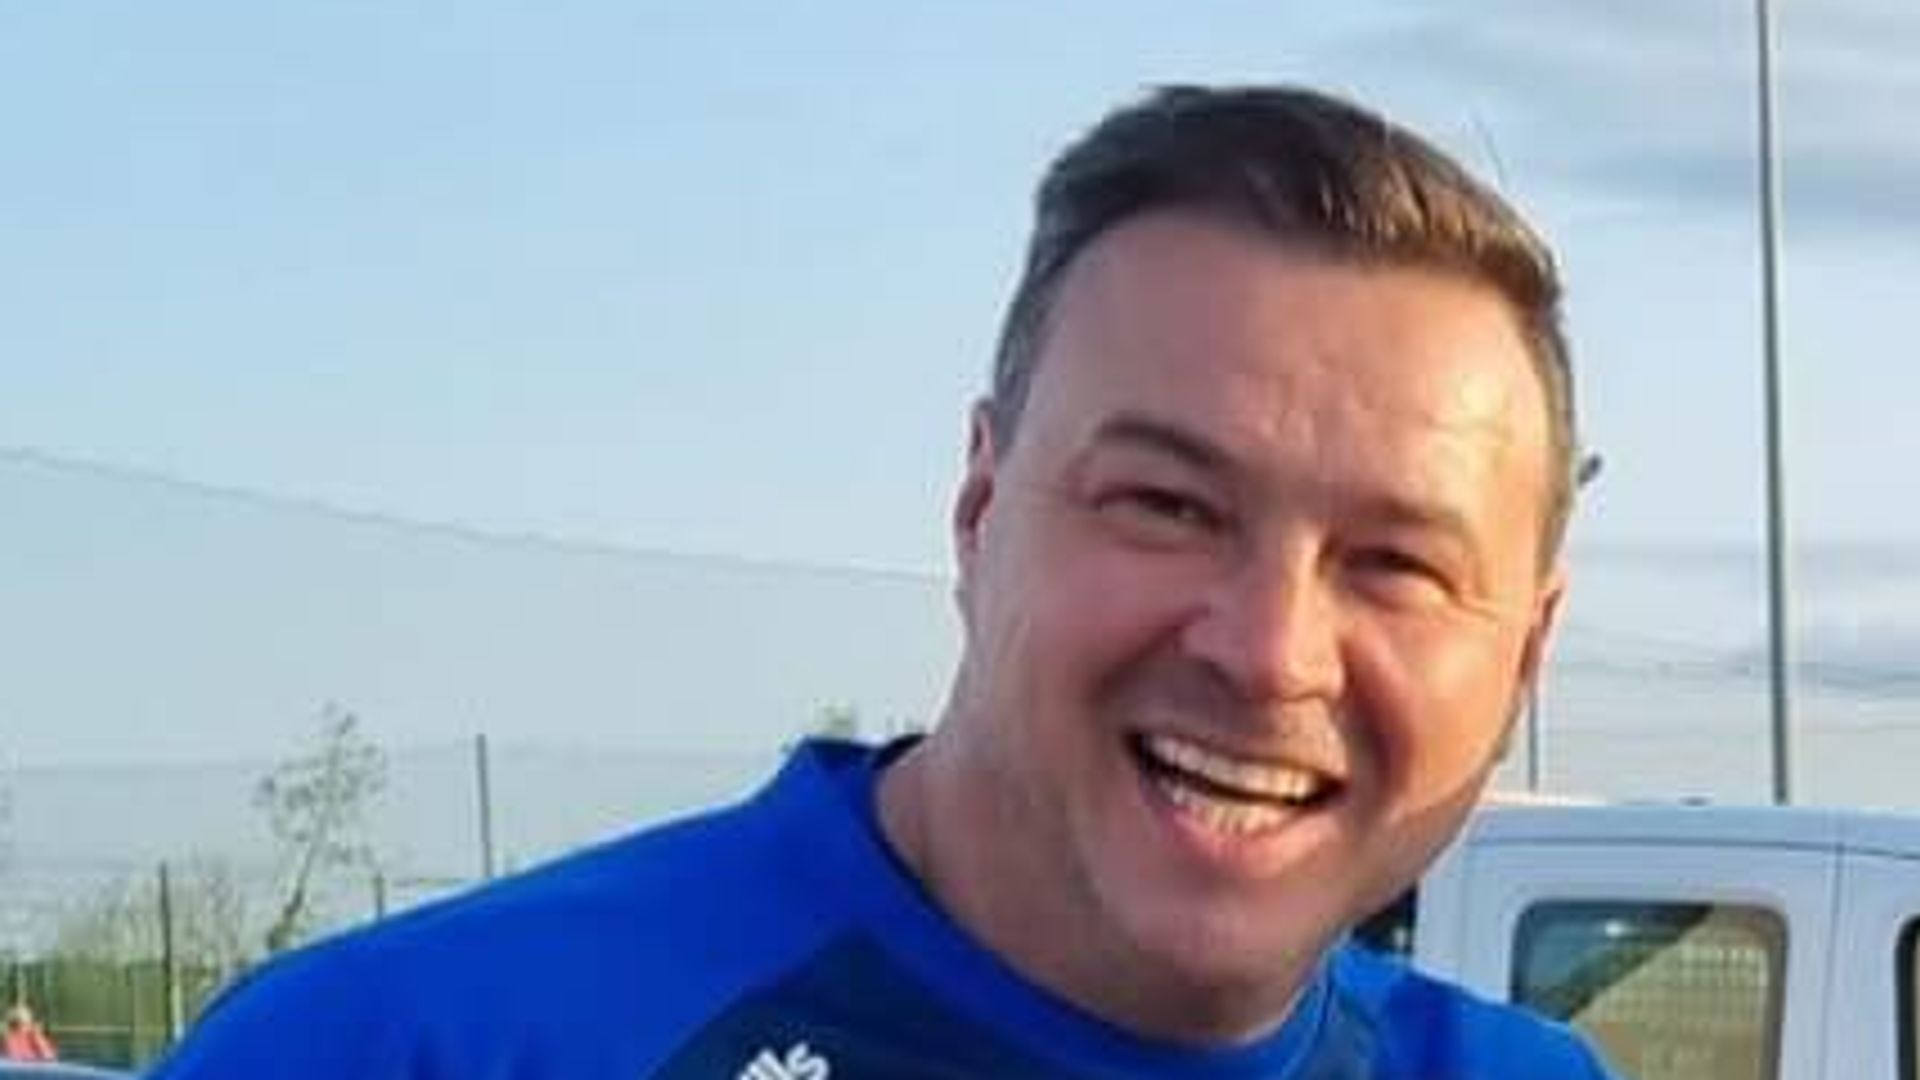 Youth football coach found dead in Majorca